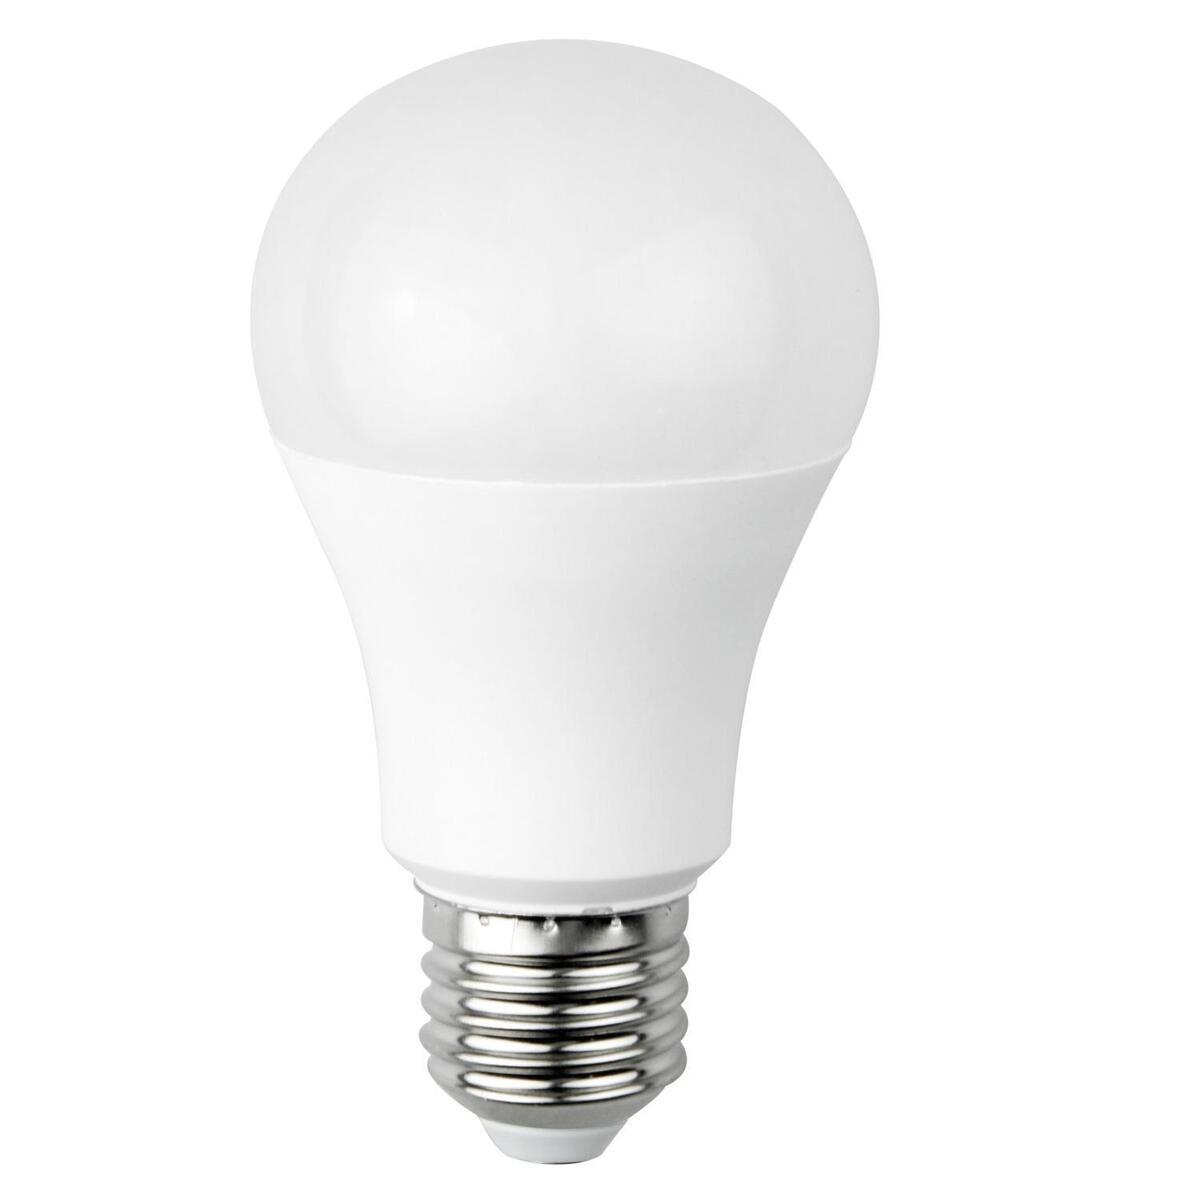 10 Lampadine LED E27 Lampada a Goccia 9W Luce Fredda con sensore